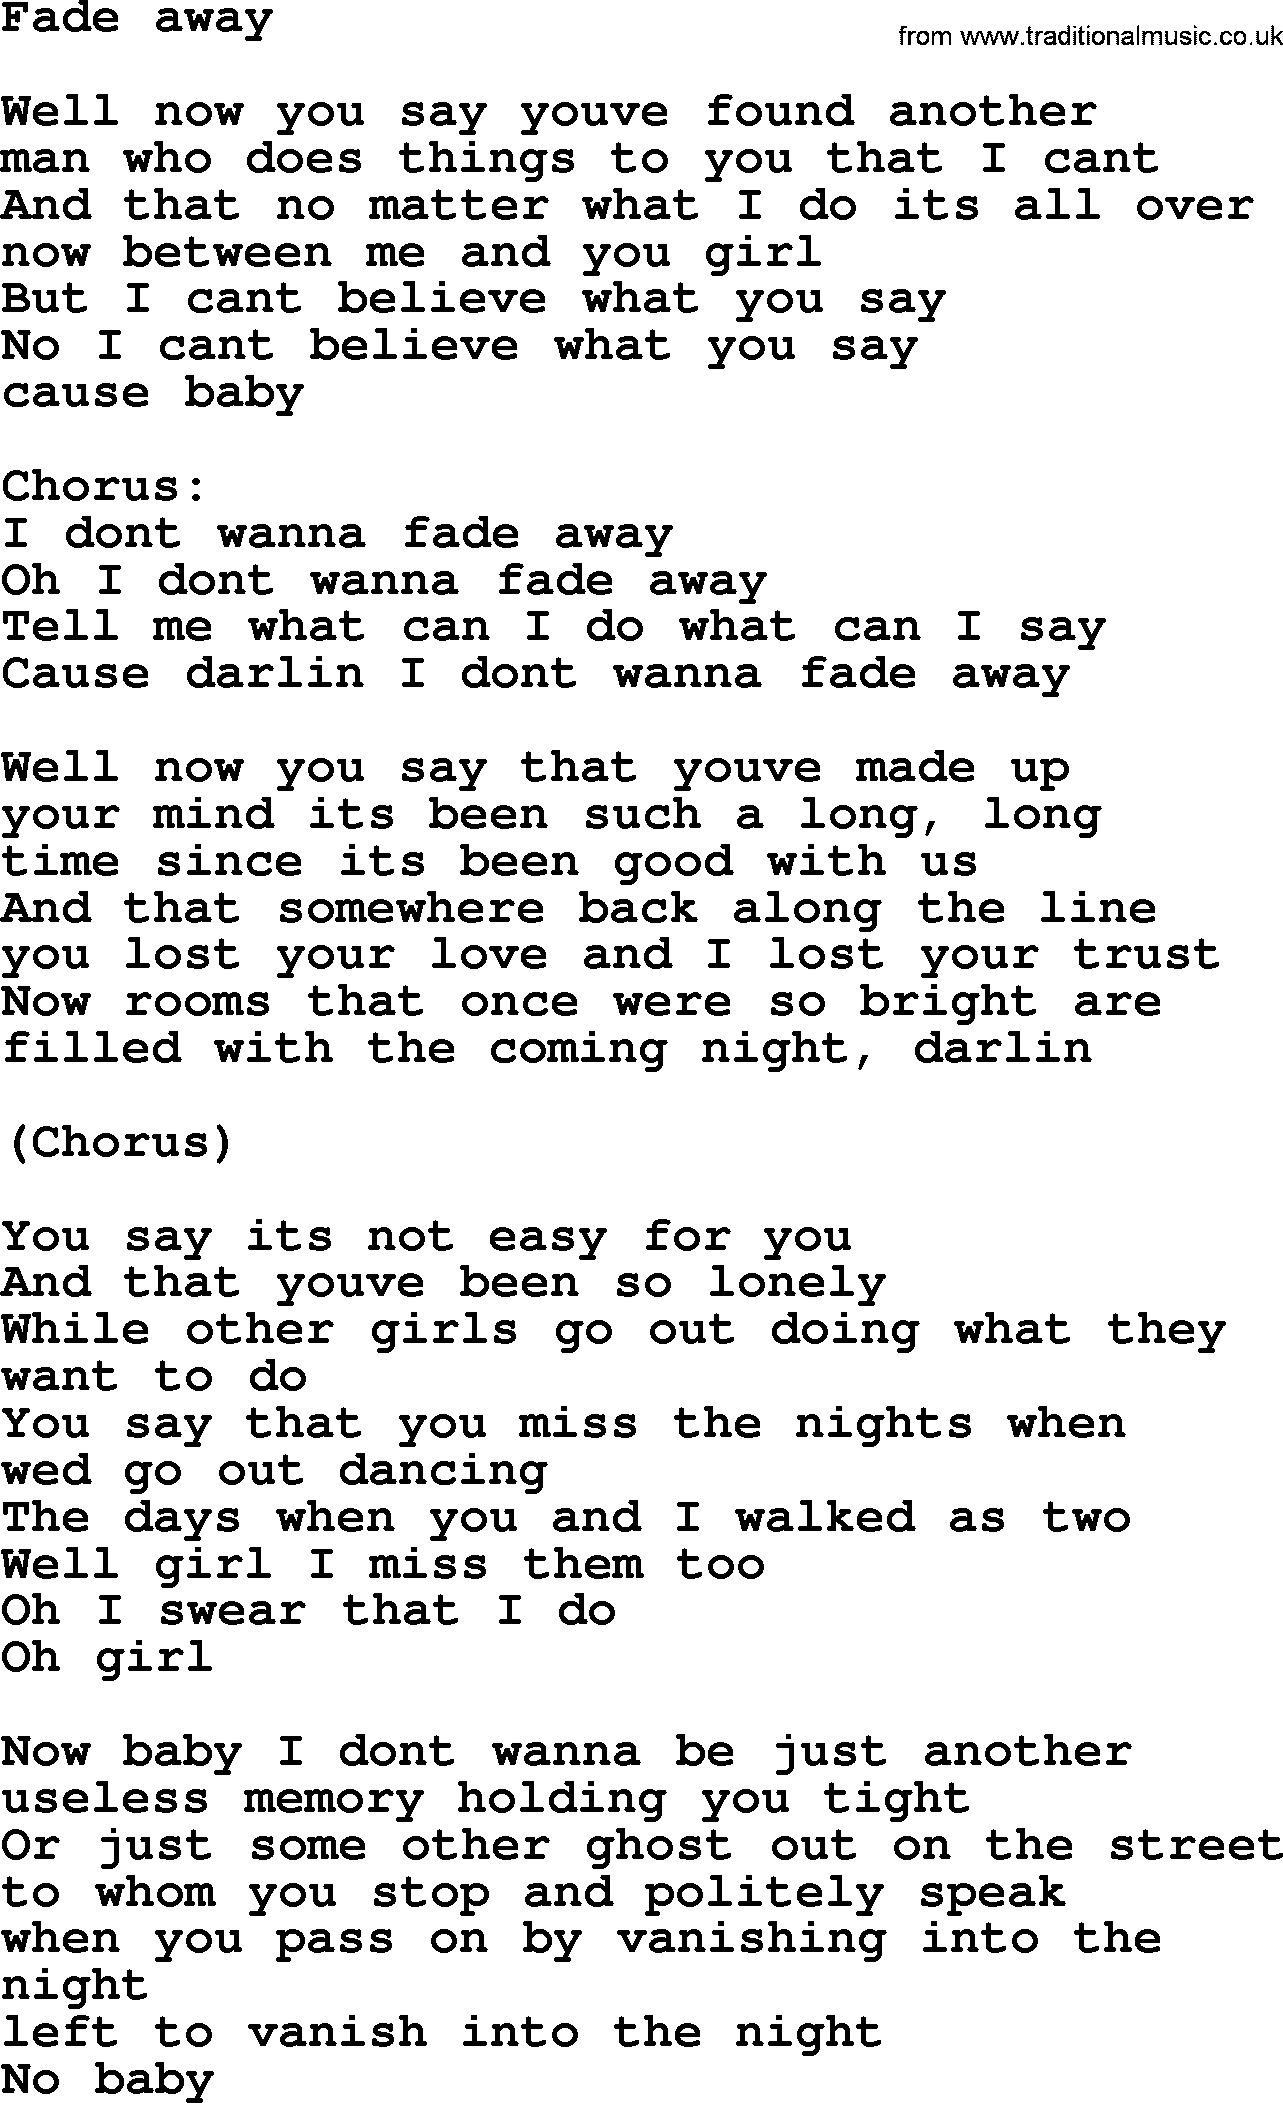 Bruce Springsteen song: Fade Away lyrics